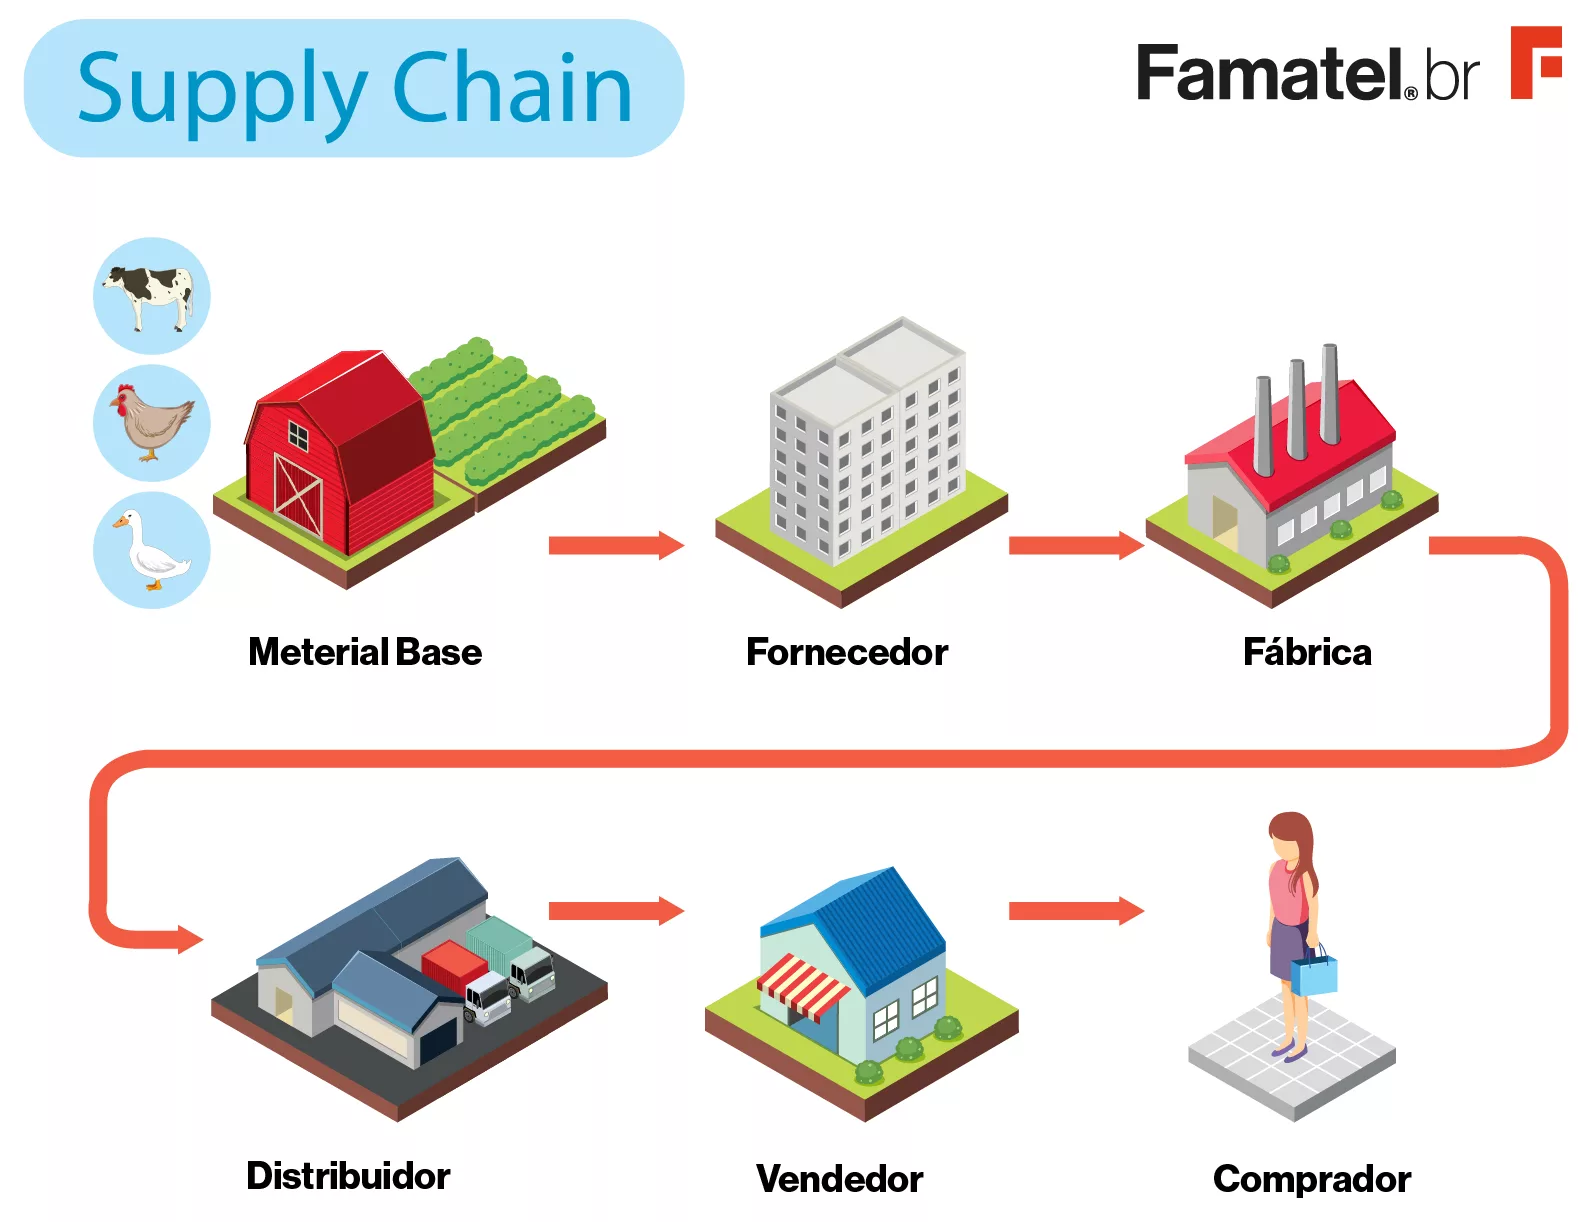 Supply Chain - Blog Famatel Indústria 4.0